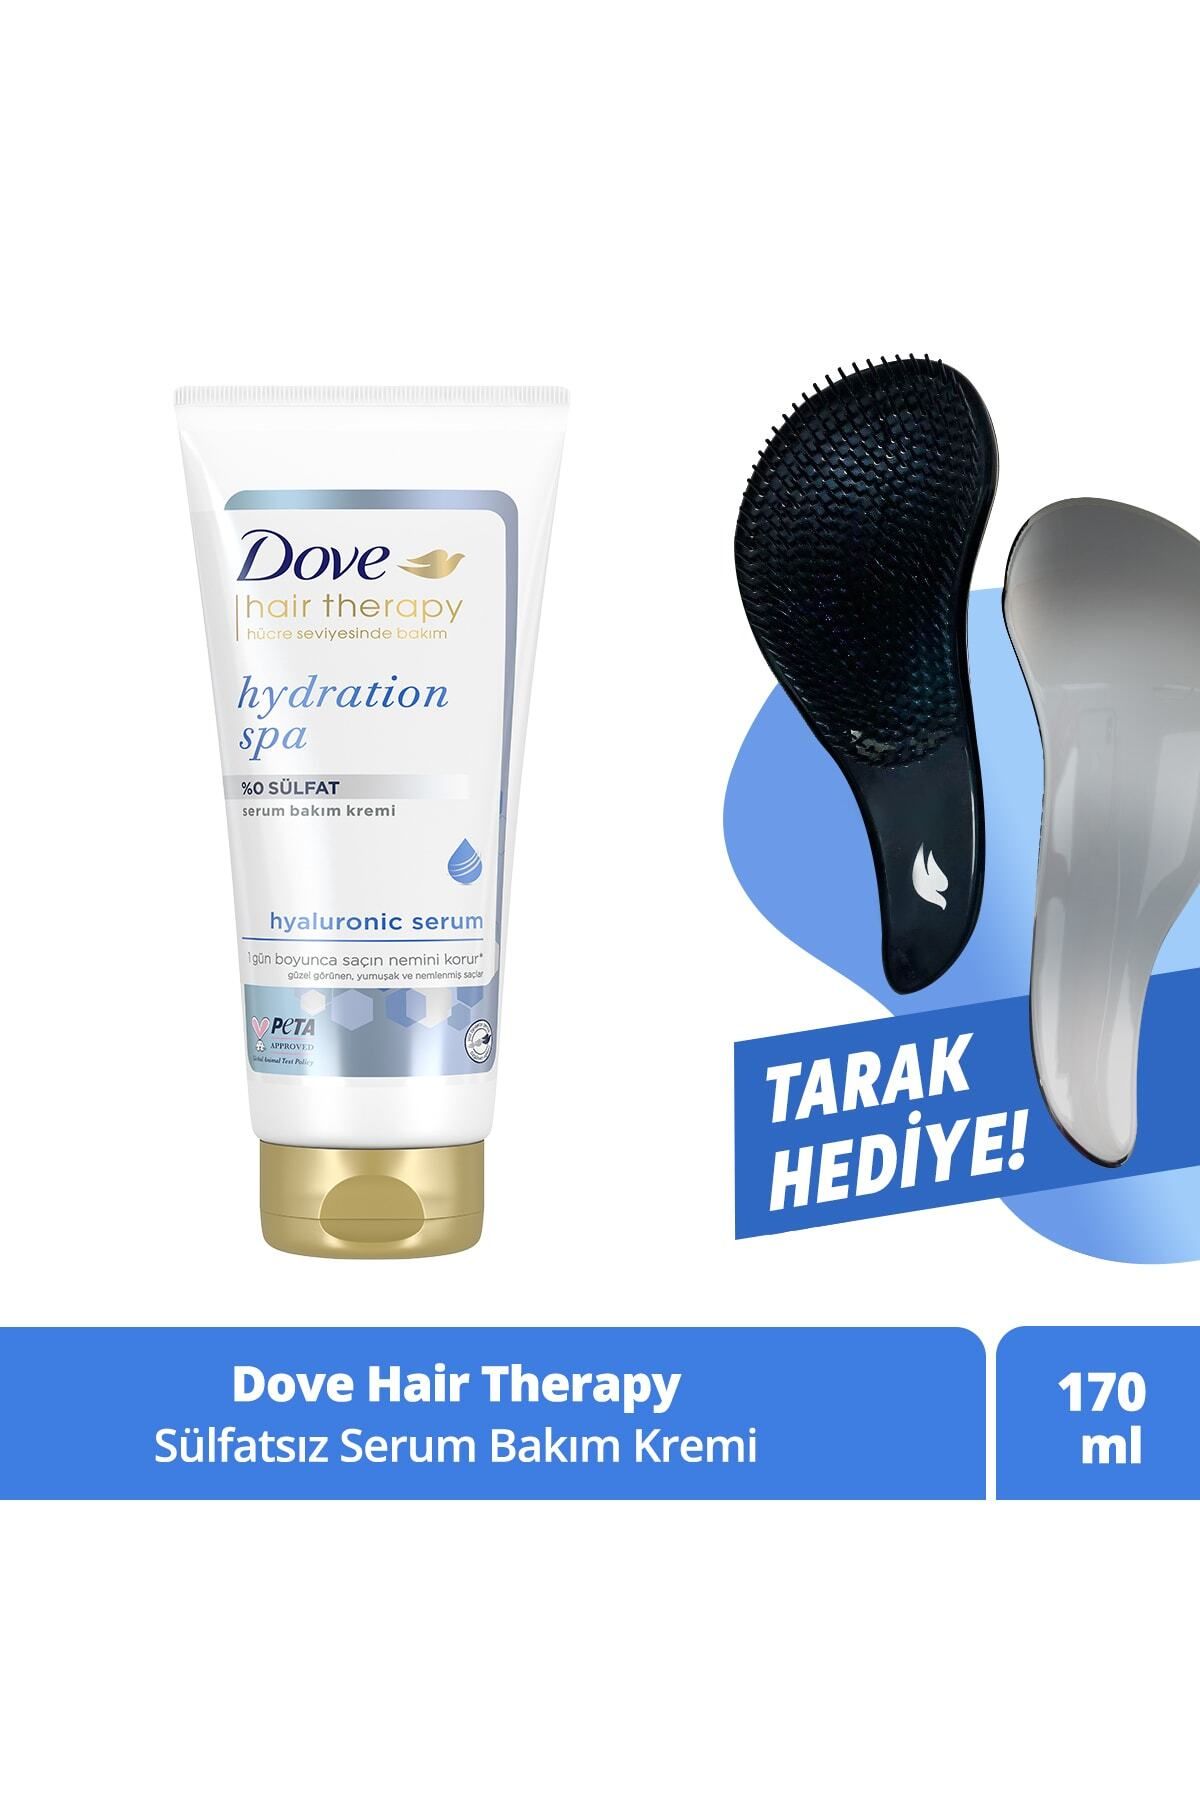 Dove Hair Therapy Serum Saç Bakım Kremi Hydration Spa %0 Sülfat 170 Ml + Tarak